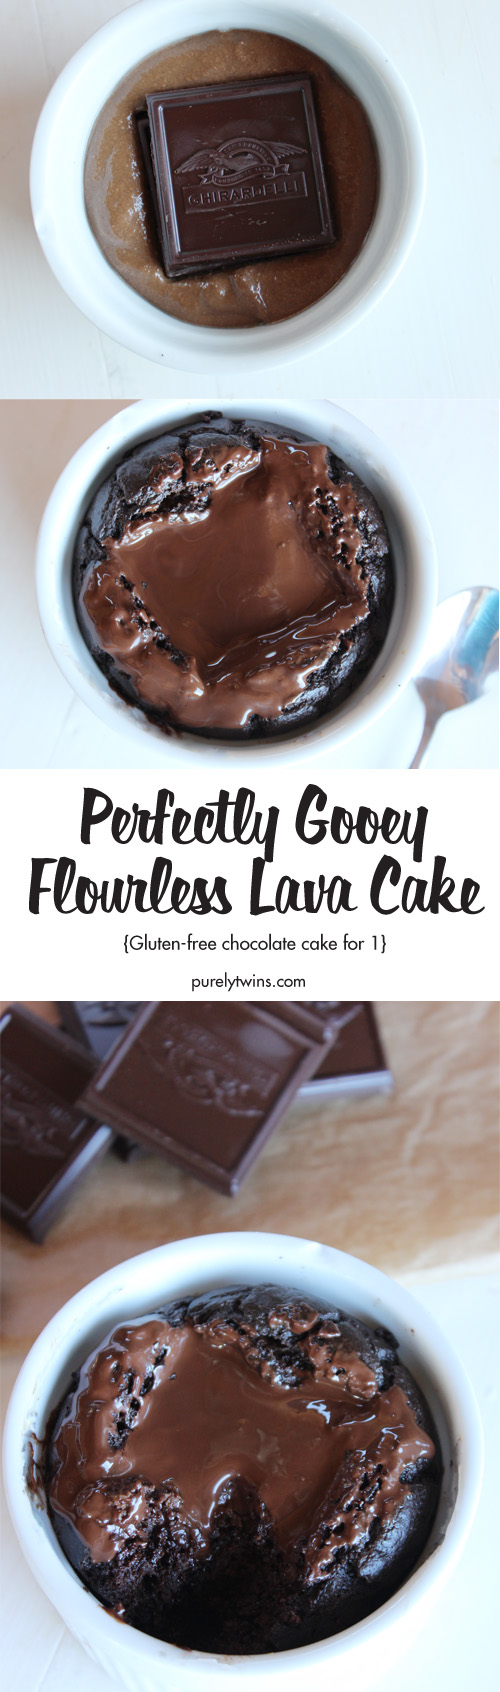 Flourless chocolate lava cake. Gluten-free. Grain-free. Serves 1.